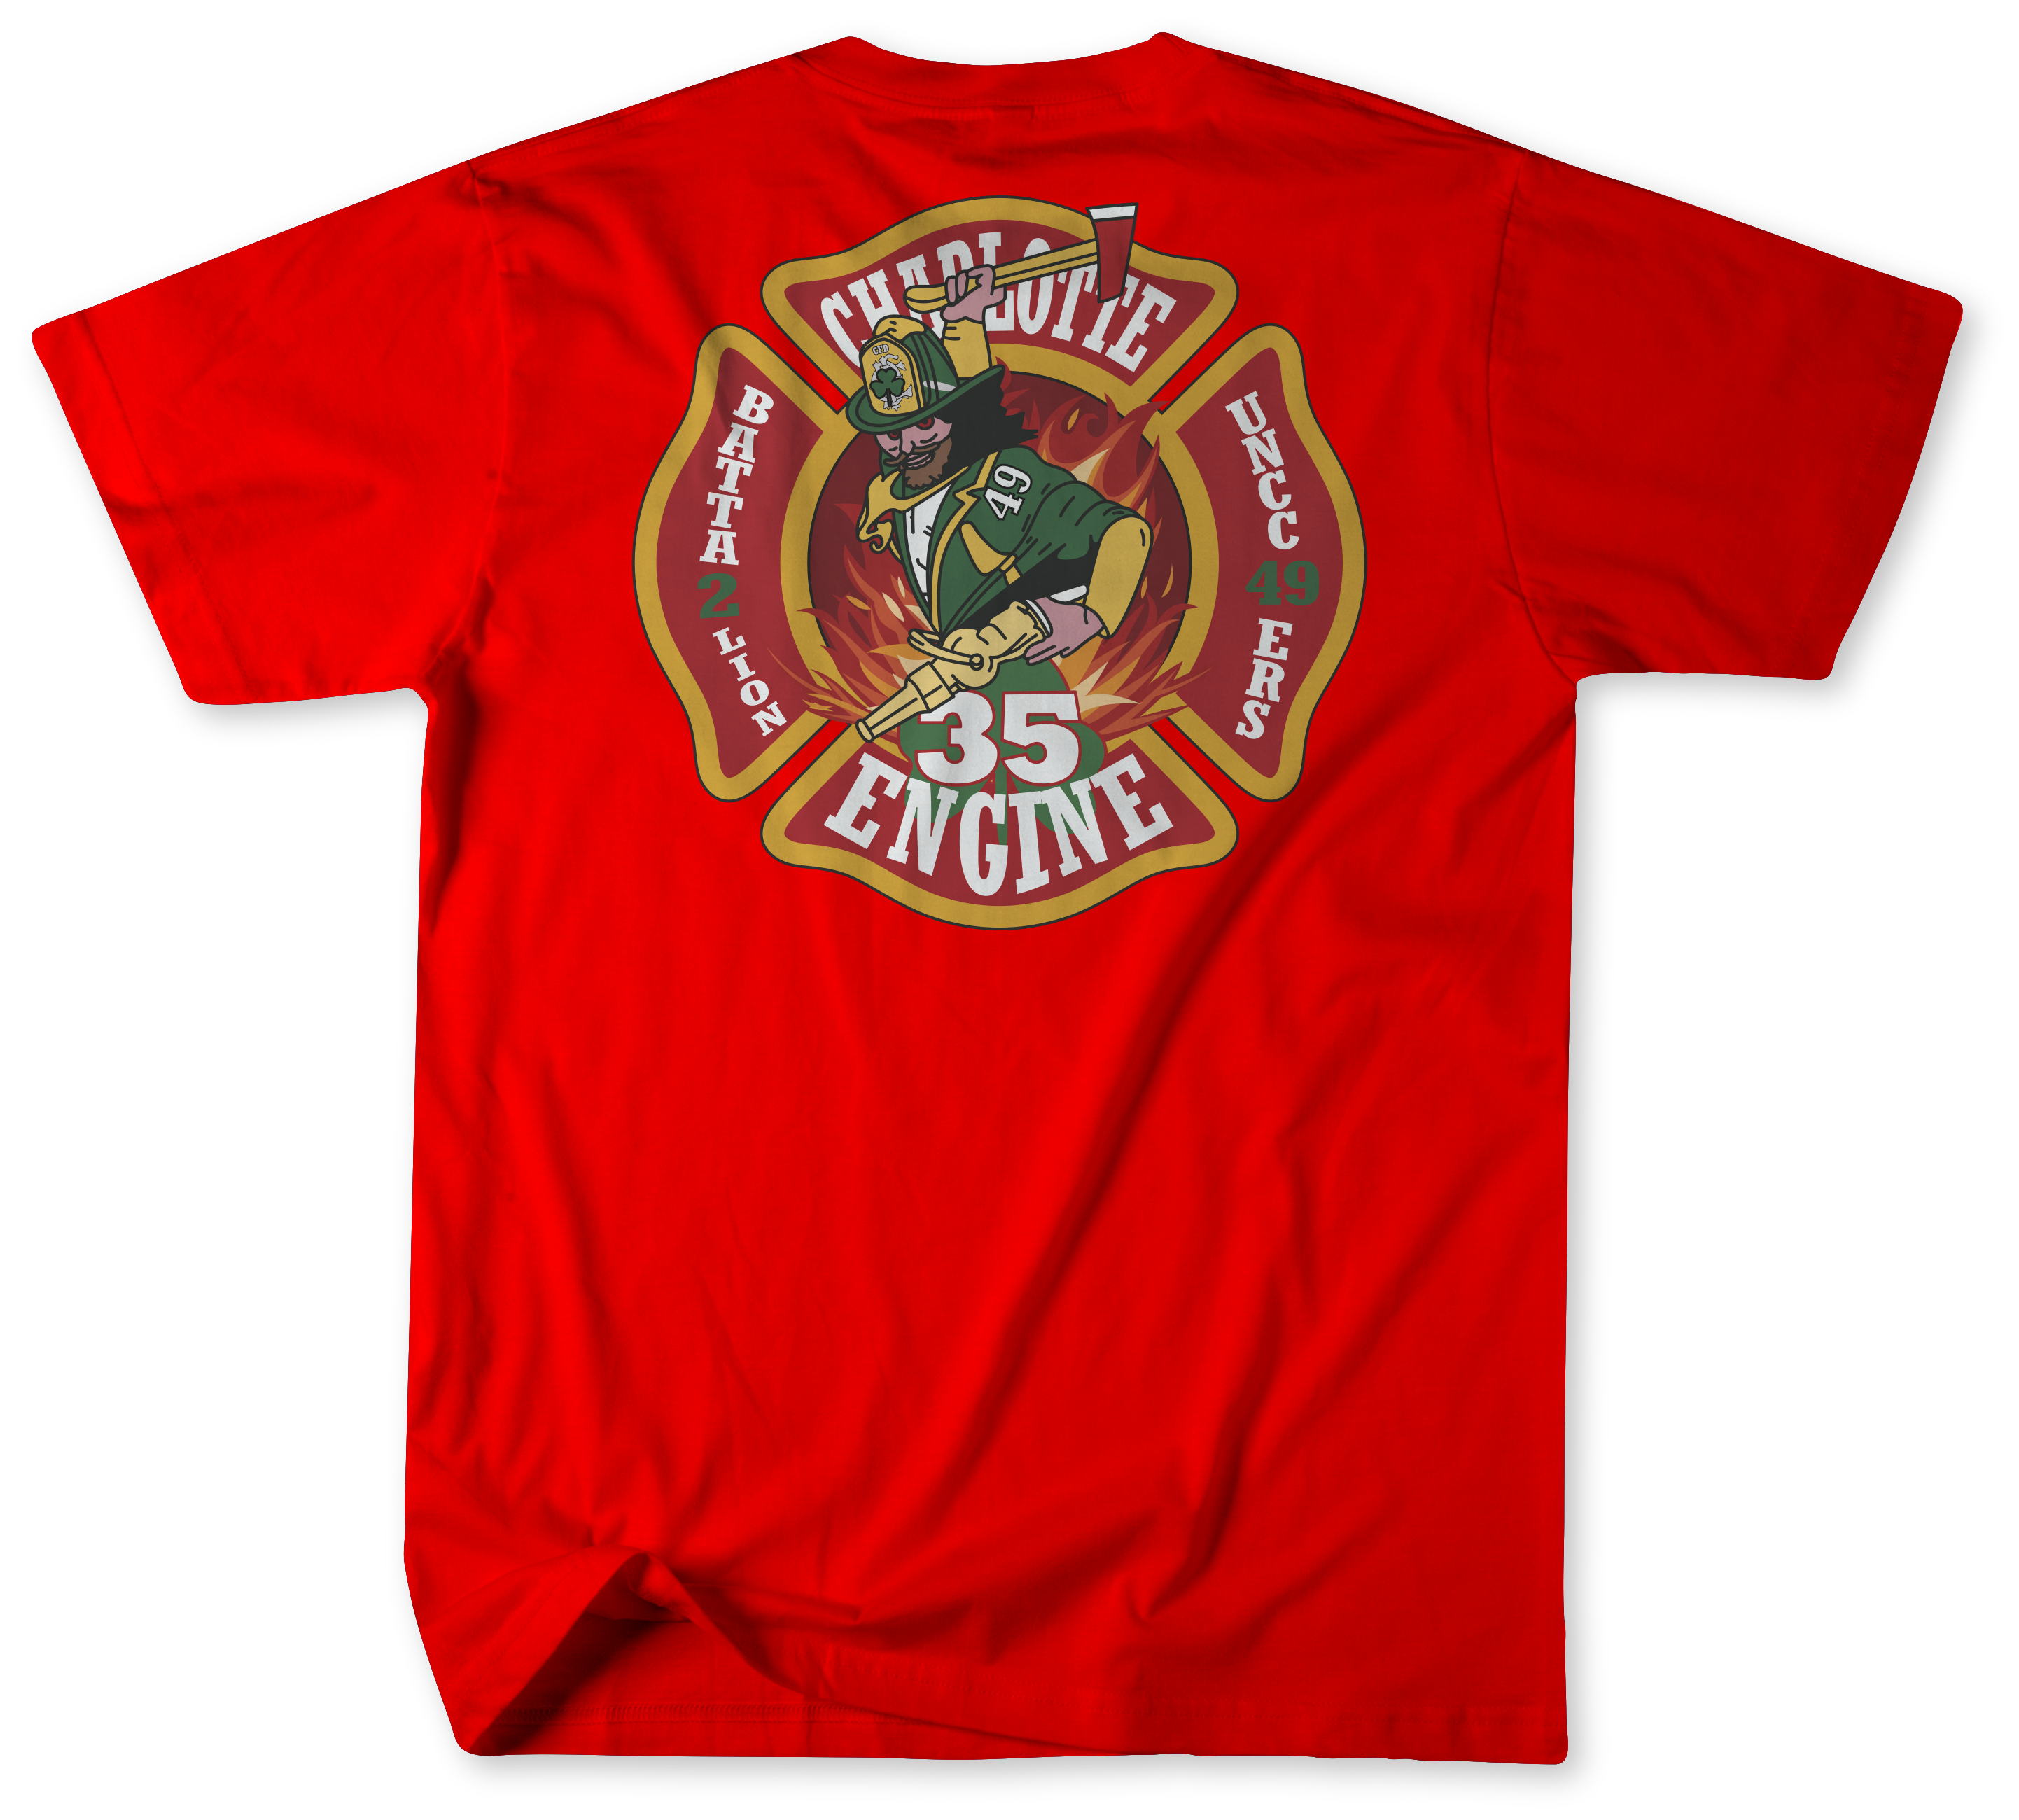 Charlotte fire department station shirt